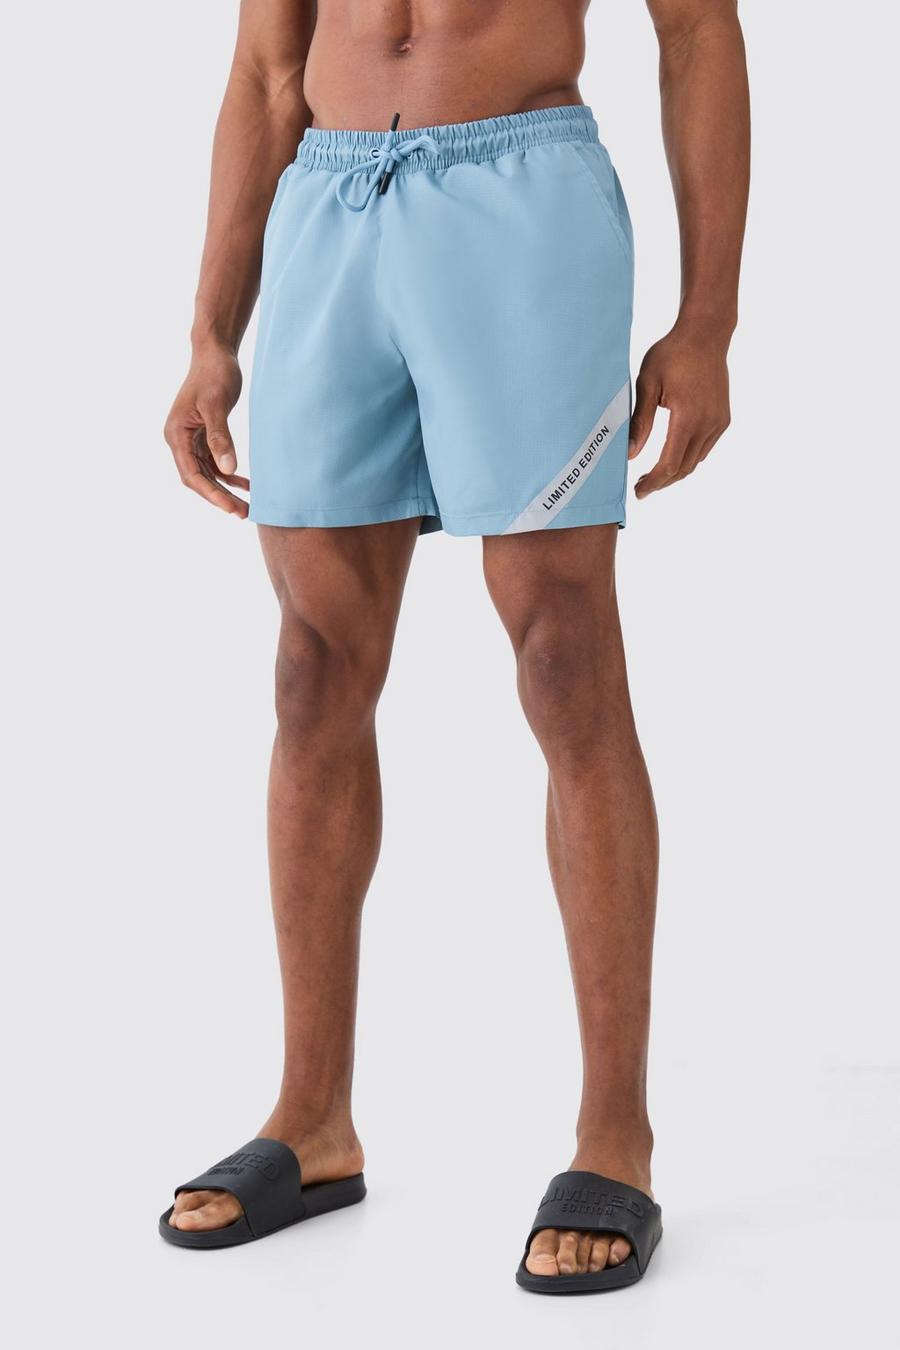 Costume a pantaloncino medio in nylon ripstop Limited Edition, Slate blue